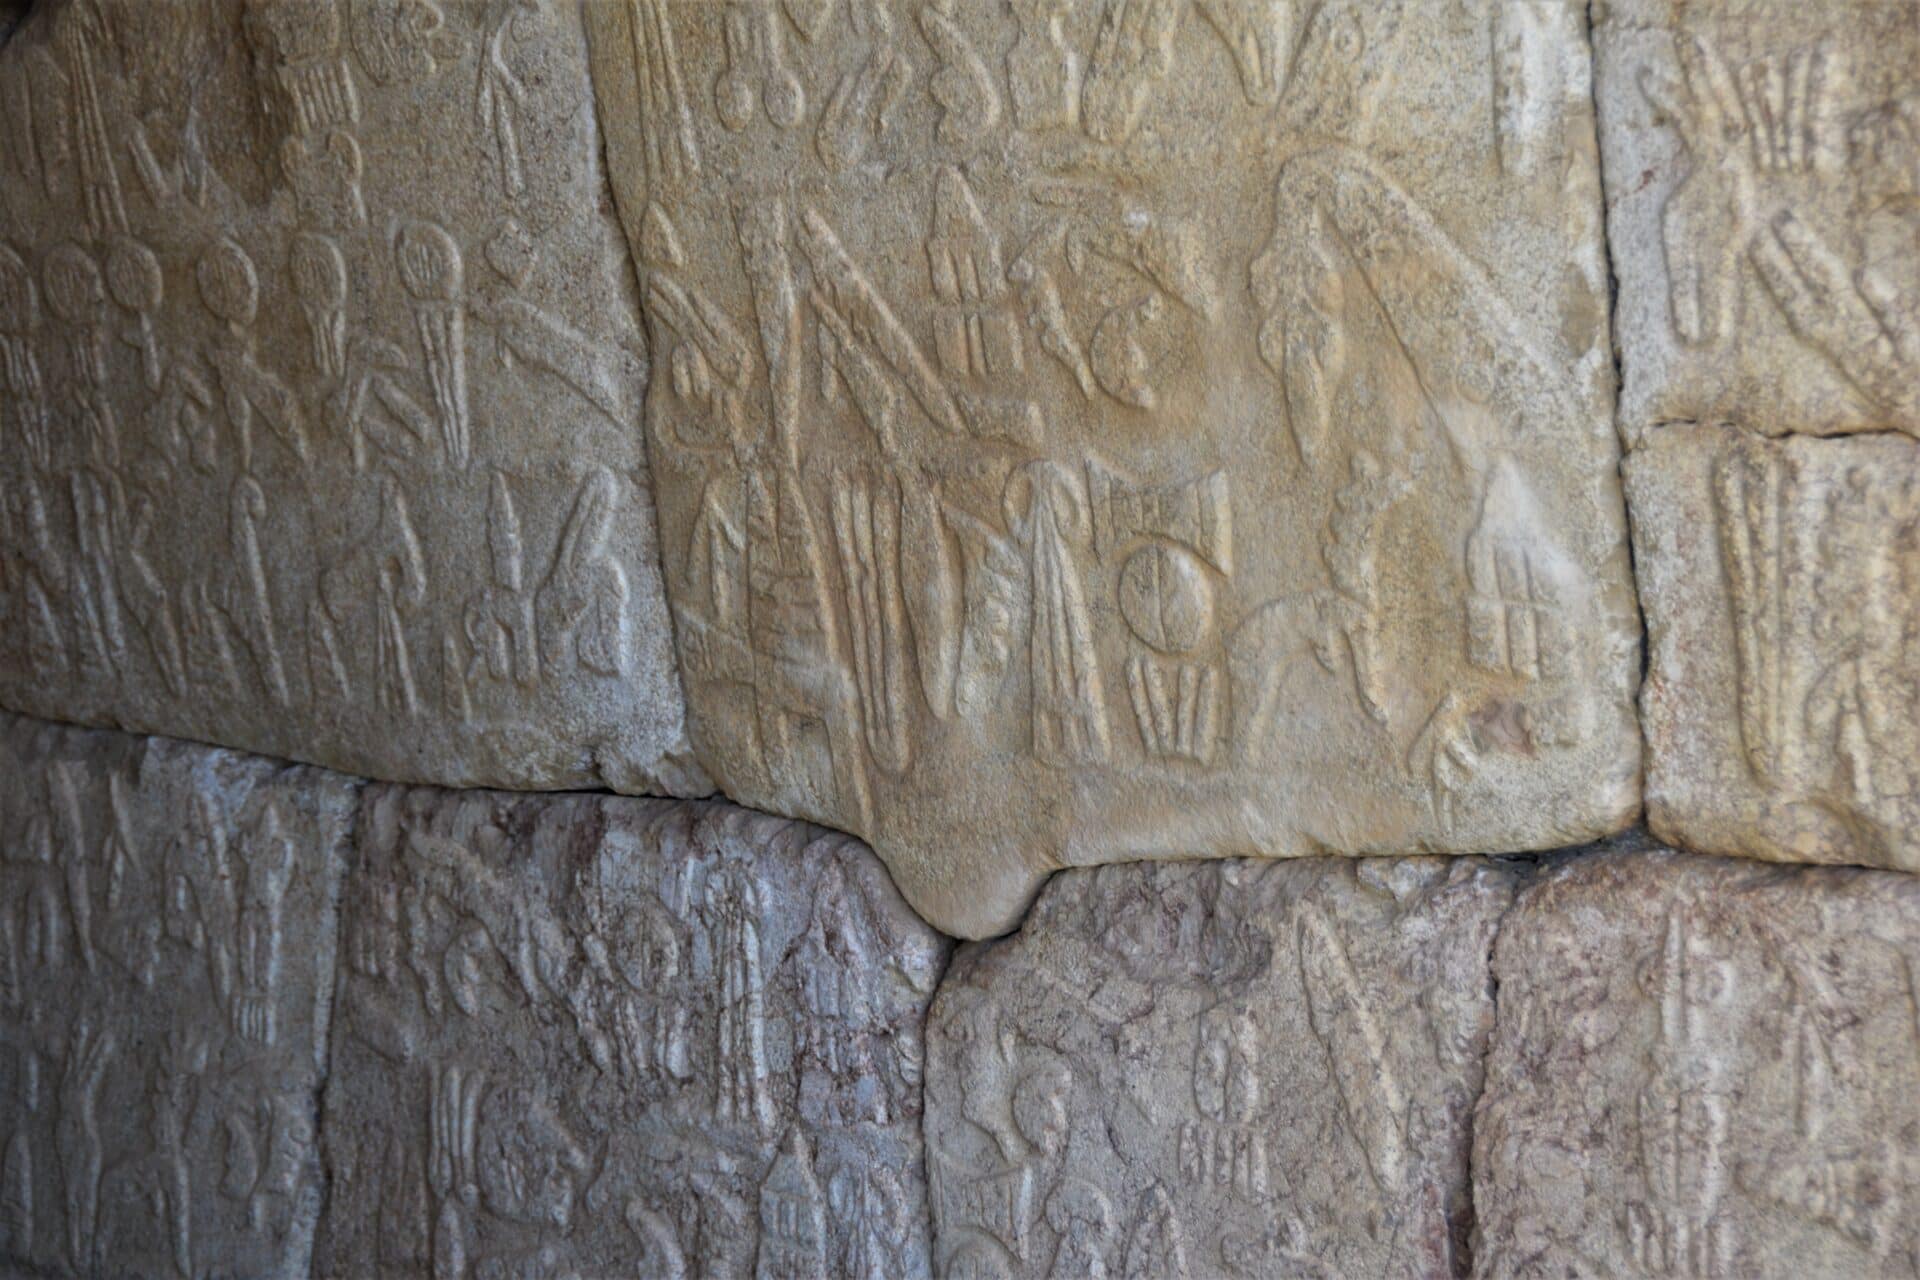 hieroglyphs on a monolithic stone wall